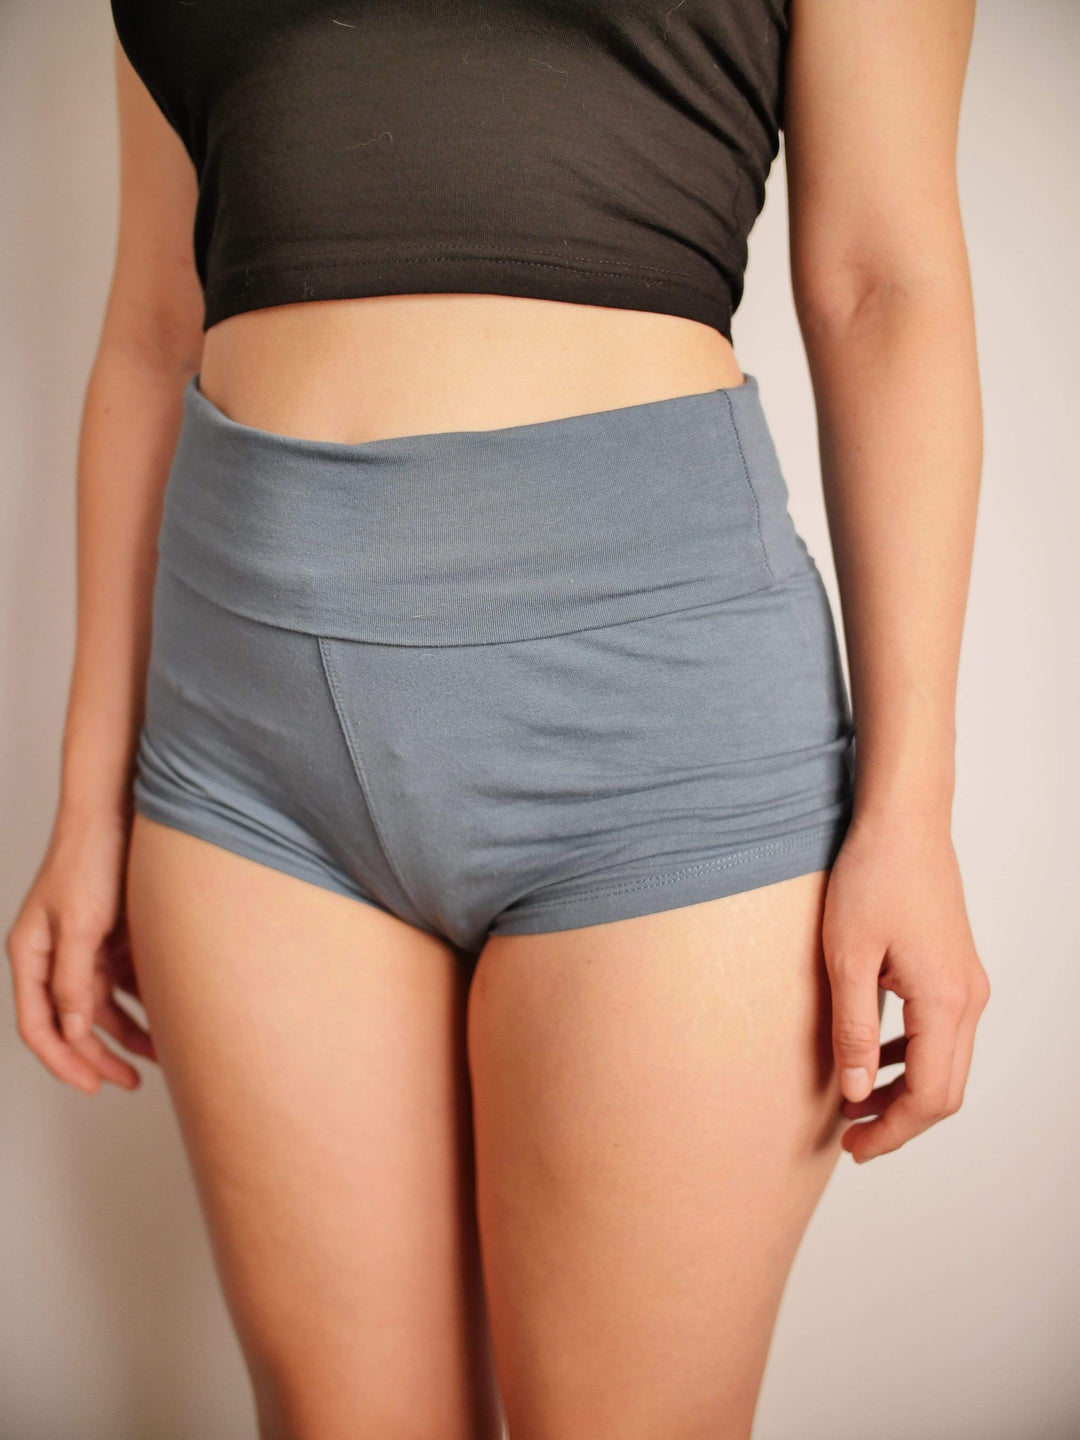 PixelThat, Women's Yoga Pants, Women's Leggings